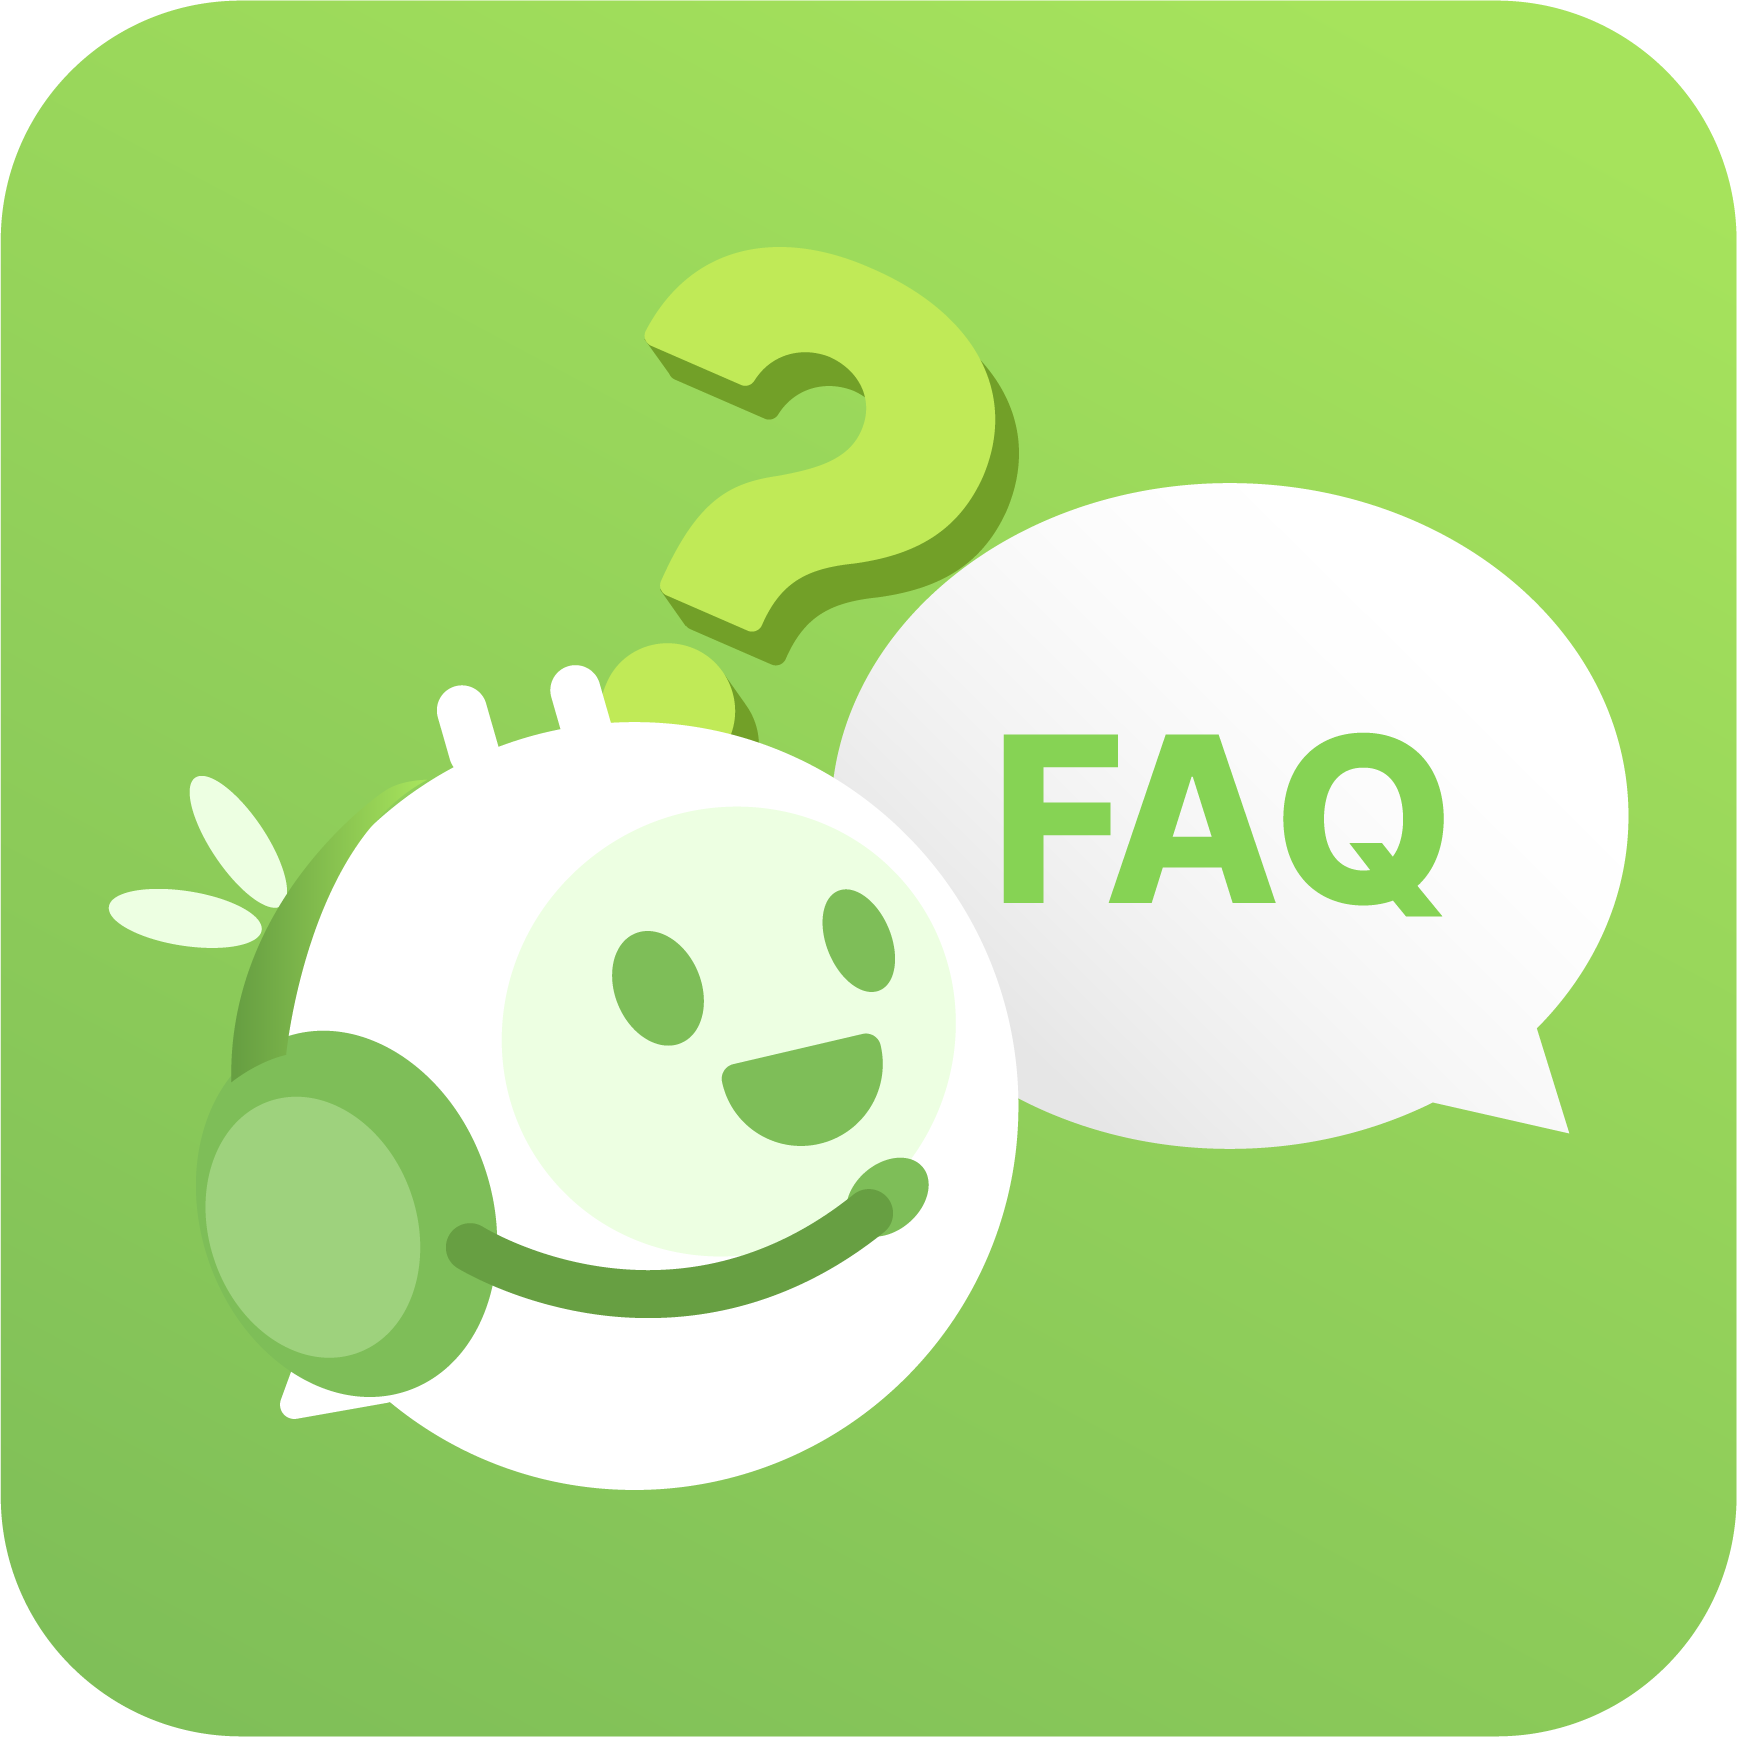 cnai FAQ simbol